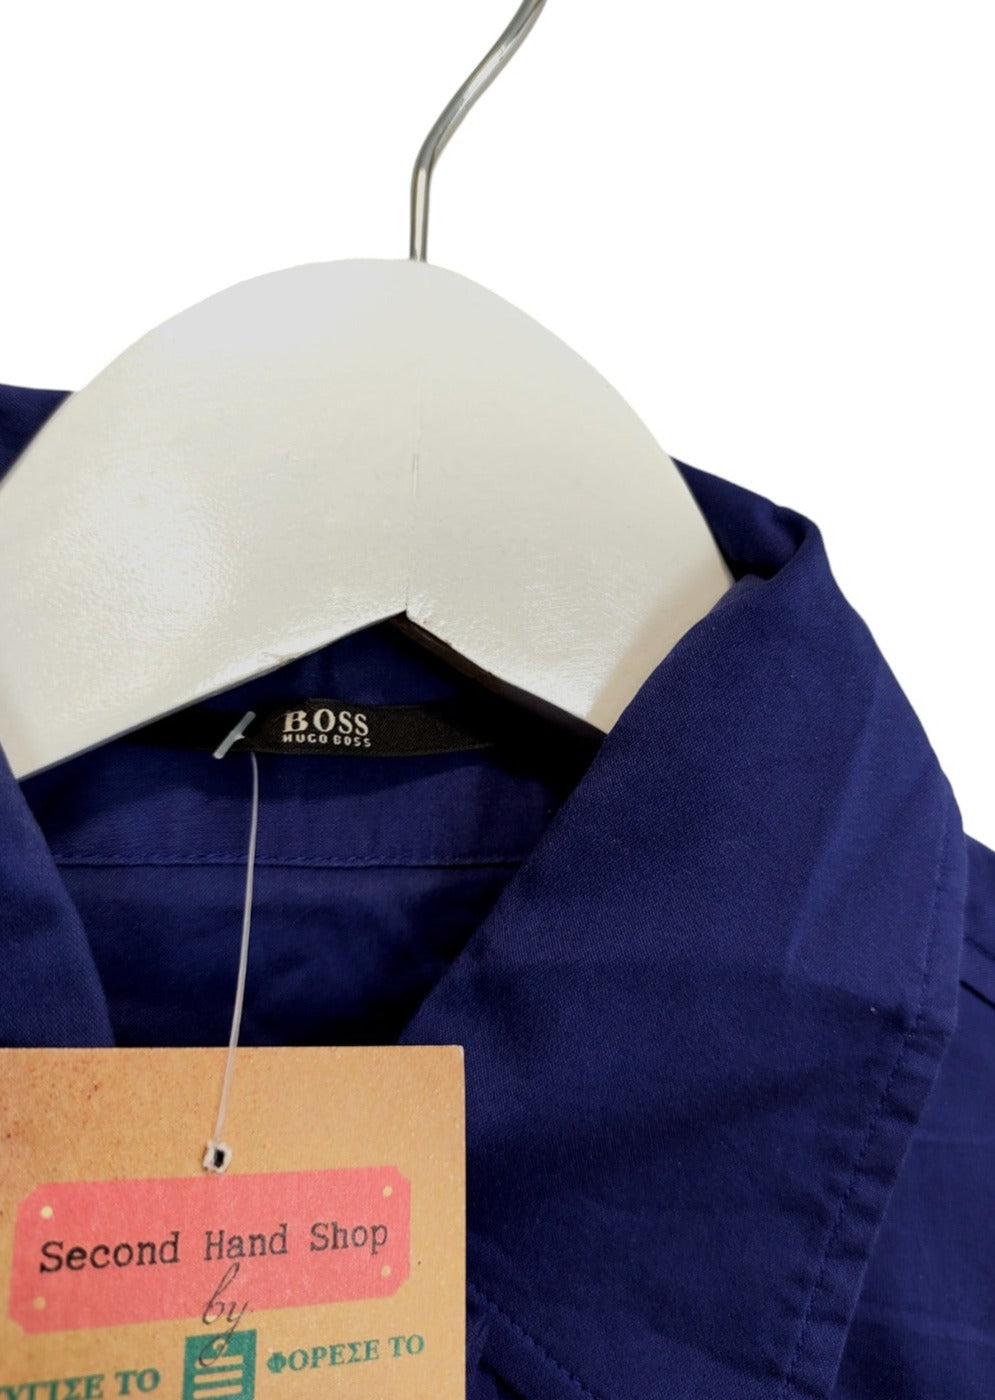 Premium Branded Γυναικείο Μπλουζο-Πουκάμισο σε Σκούρο Μπλε χρώμα (XS)